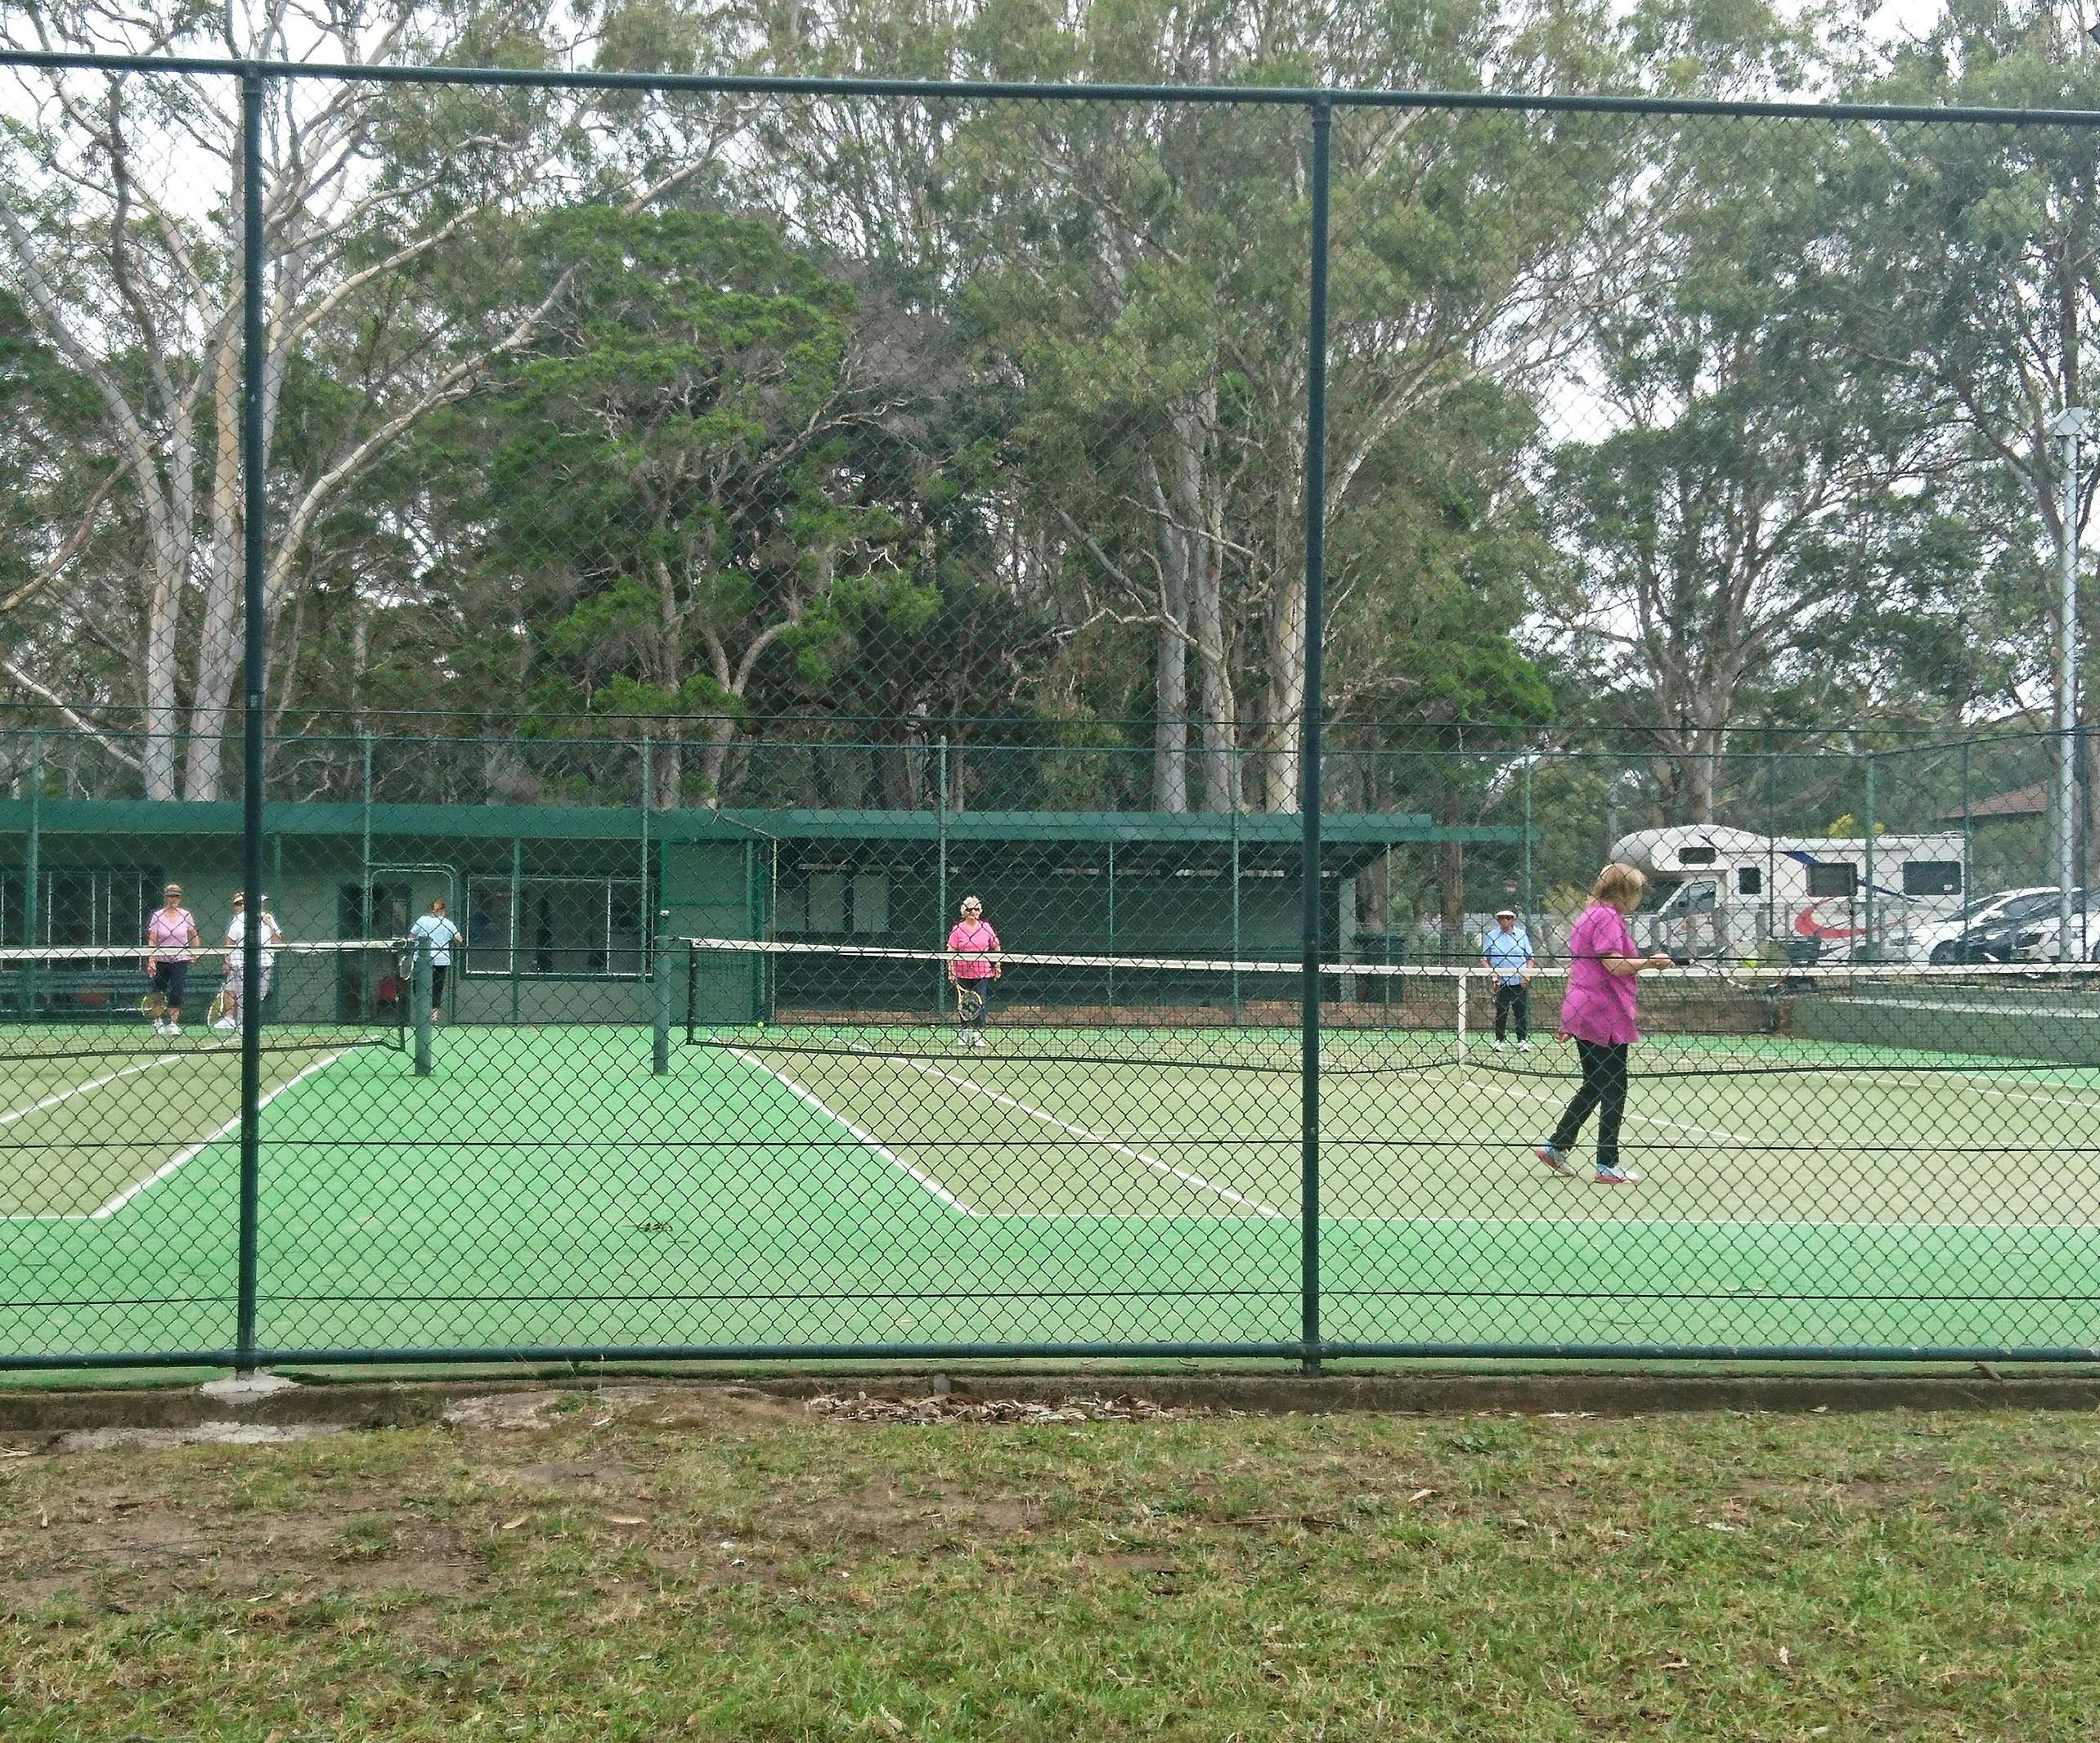 Tennis courts at Wiseman Park